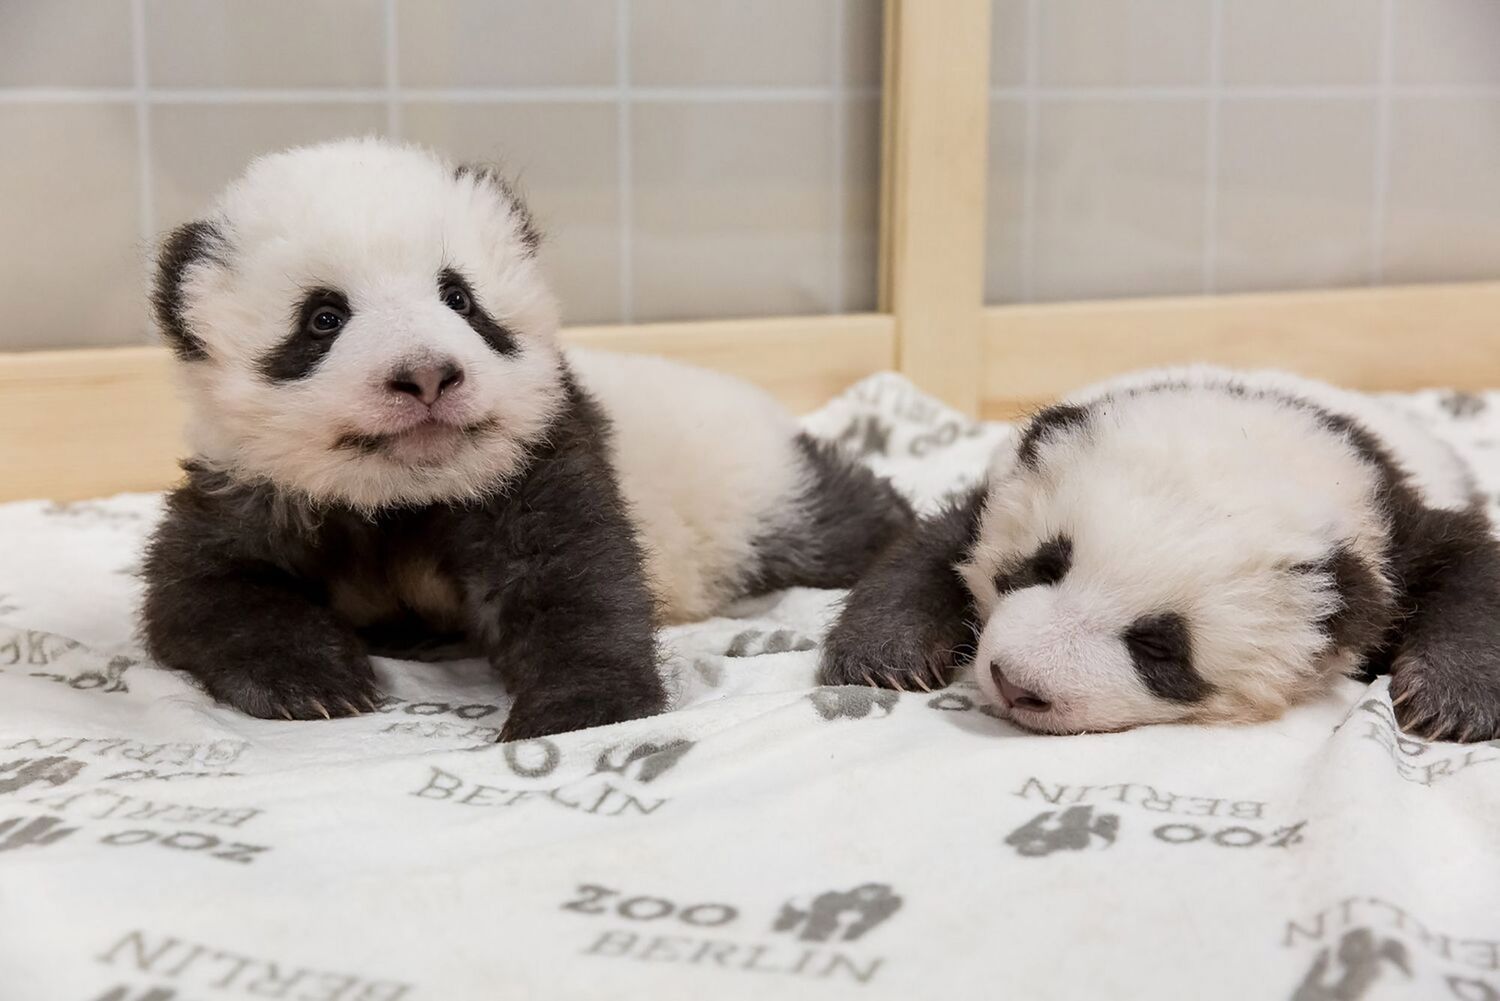 Berlin Zoo Releases New Photos of Baby Panda Twins ...